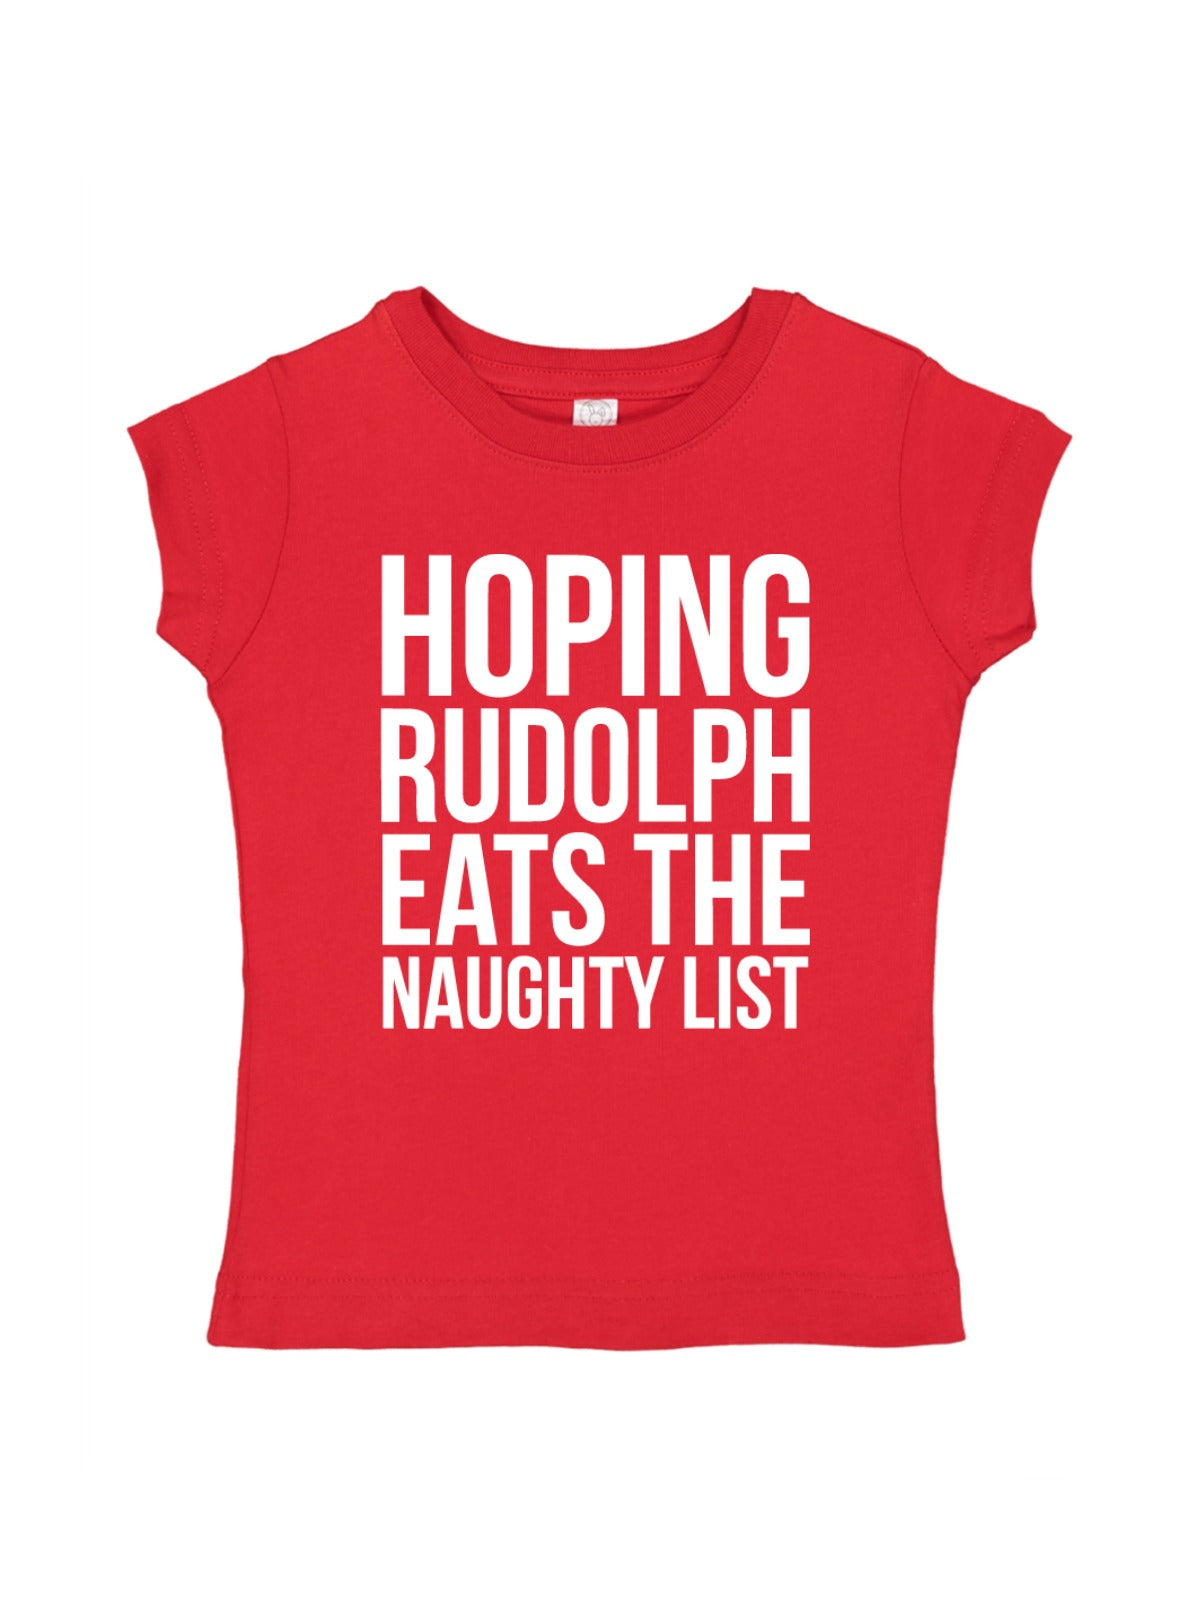 Hoping Rudolph Eats The List - Girl's T-Shirt